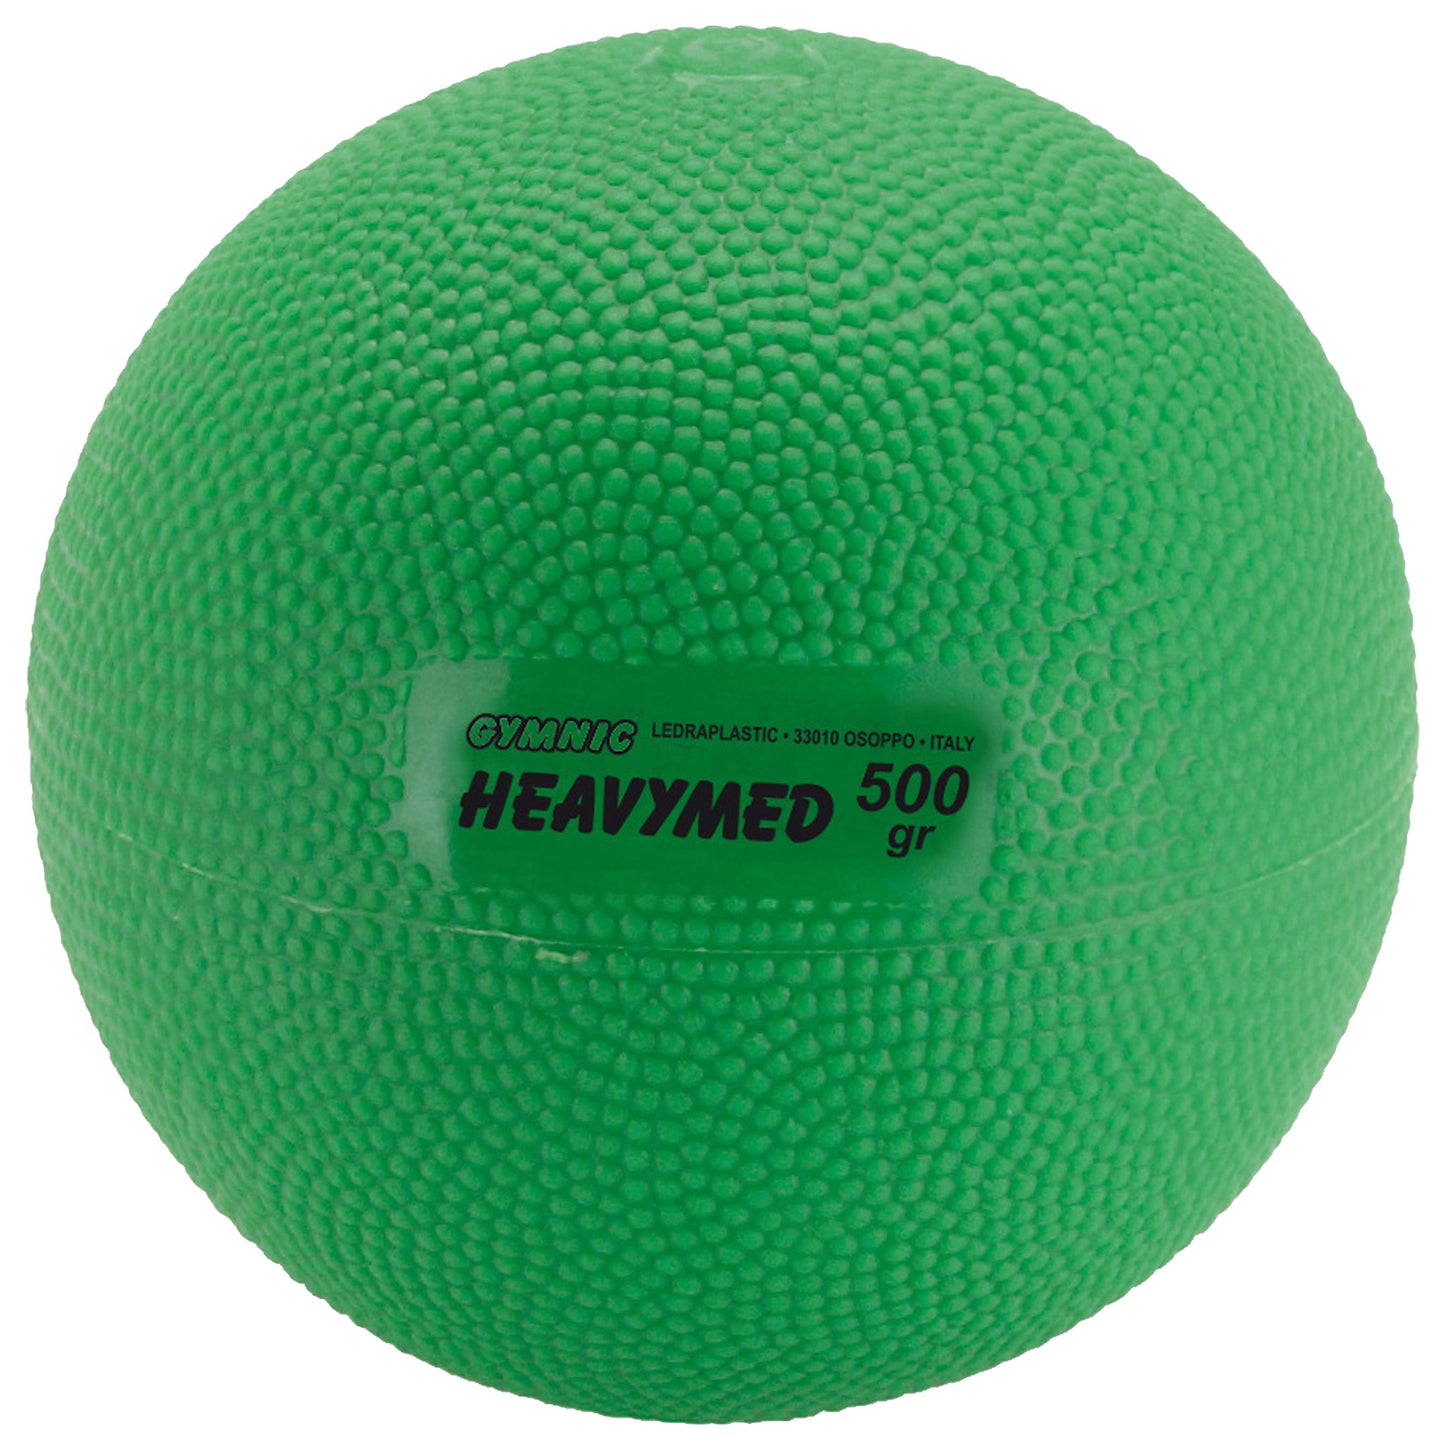 Heavymed Ball 500gr